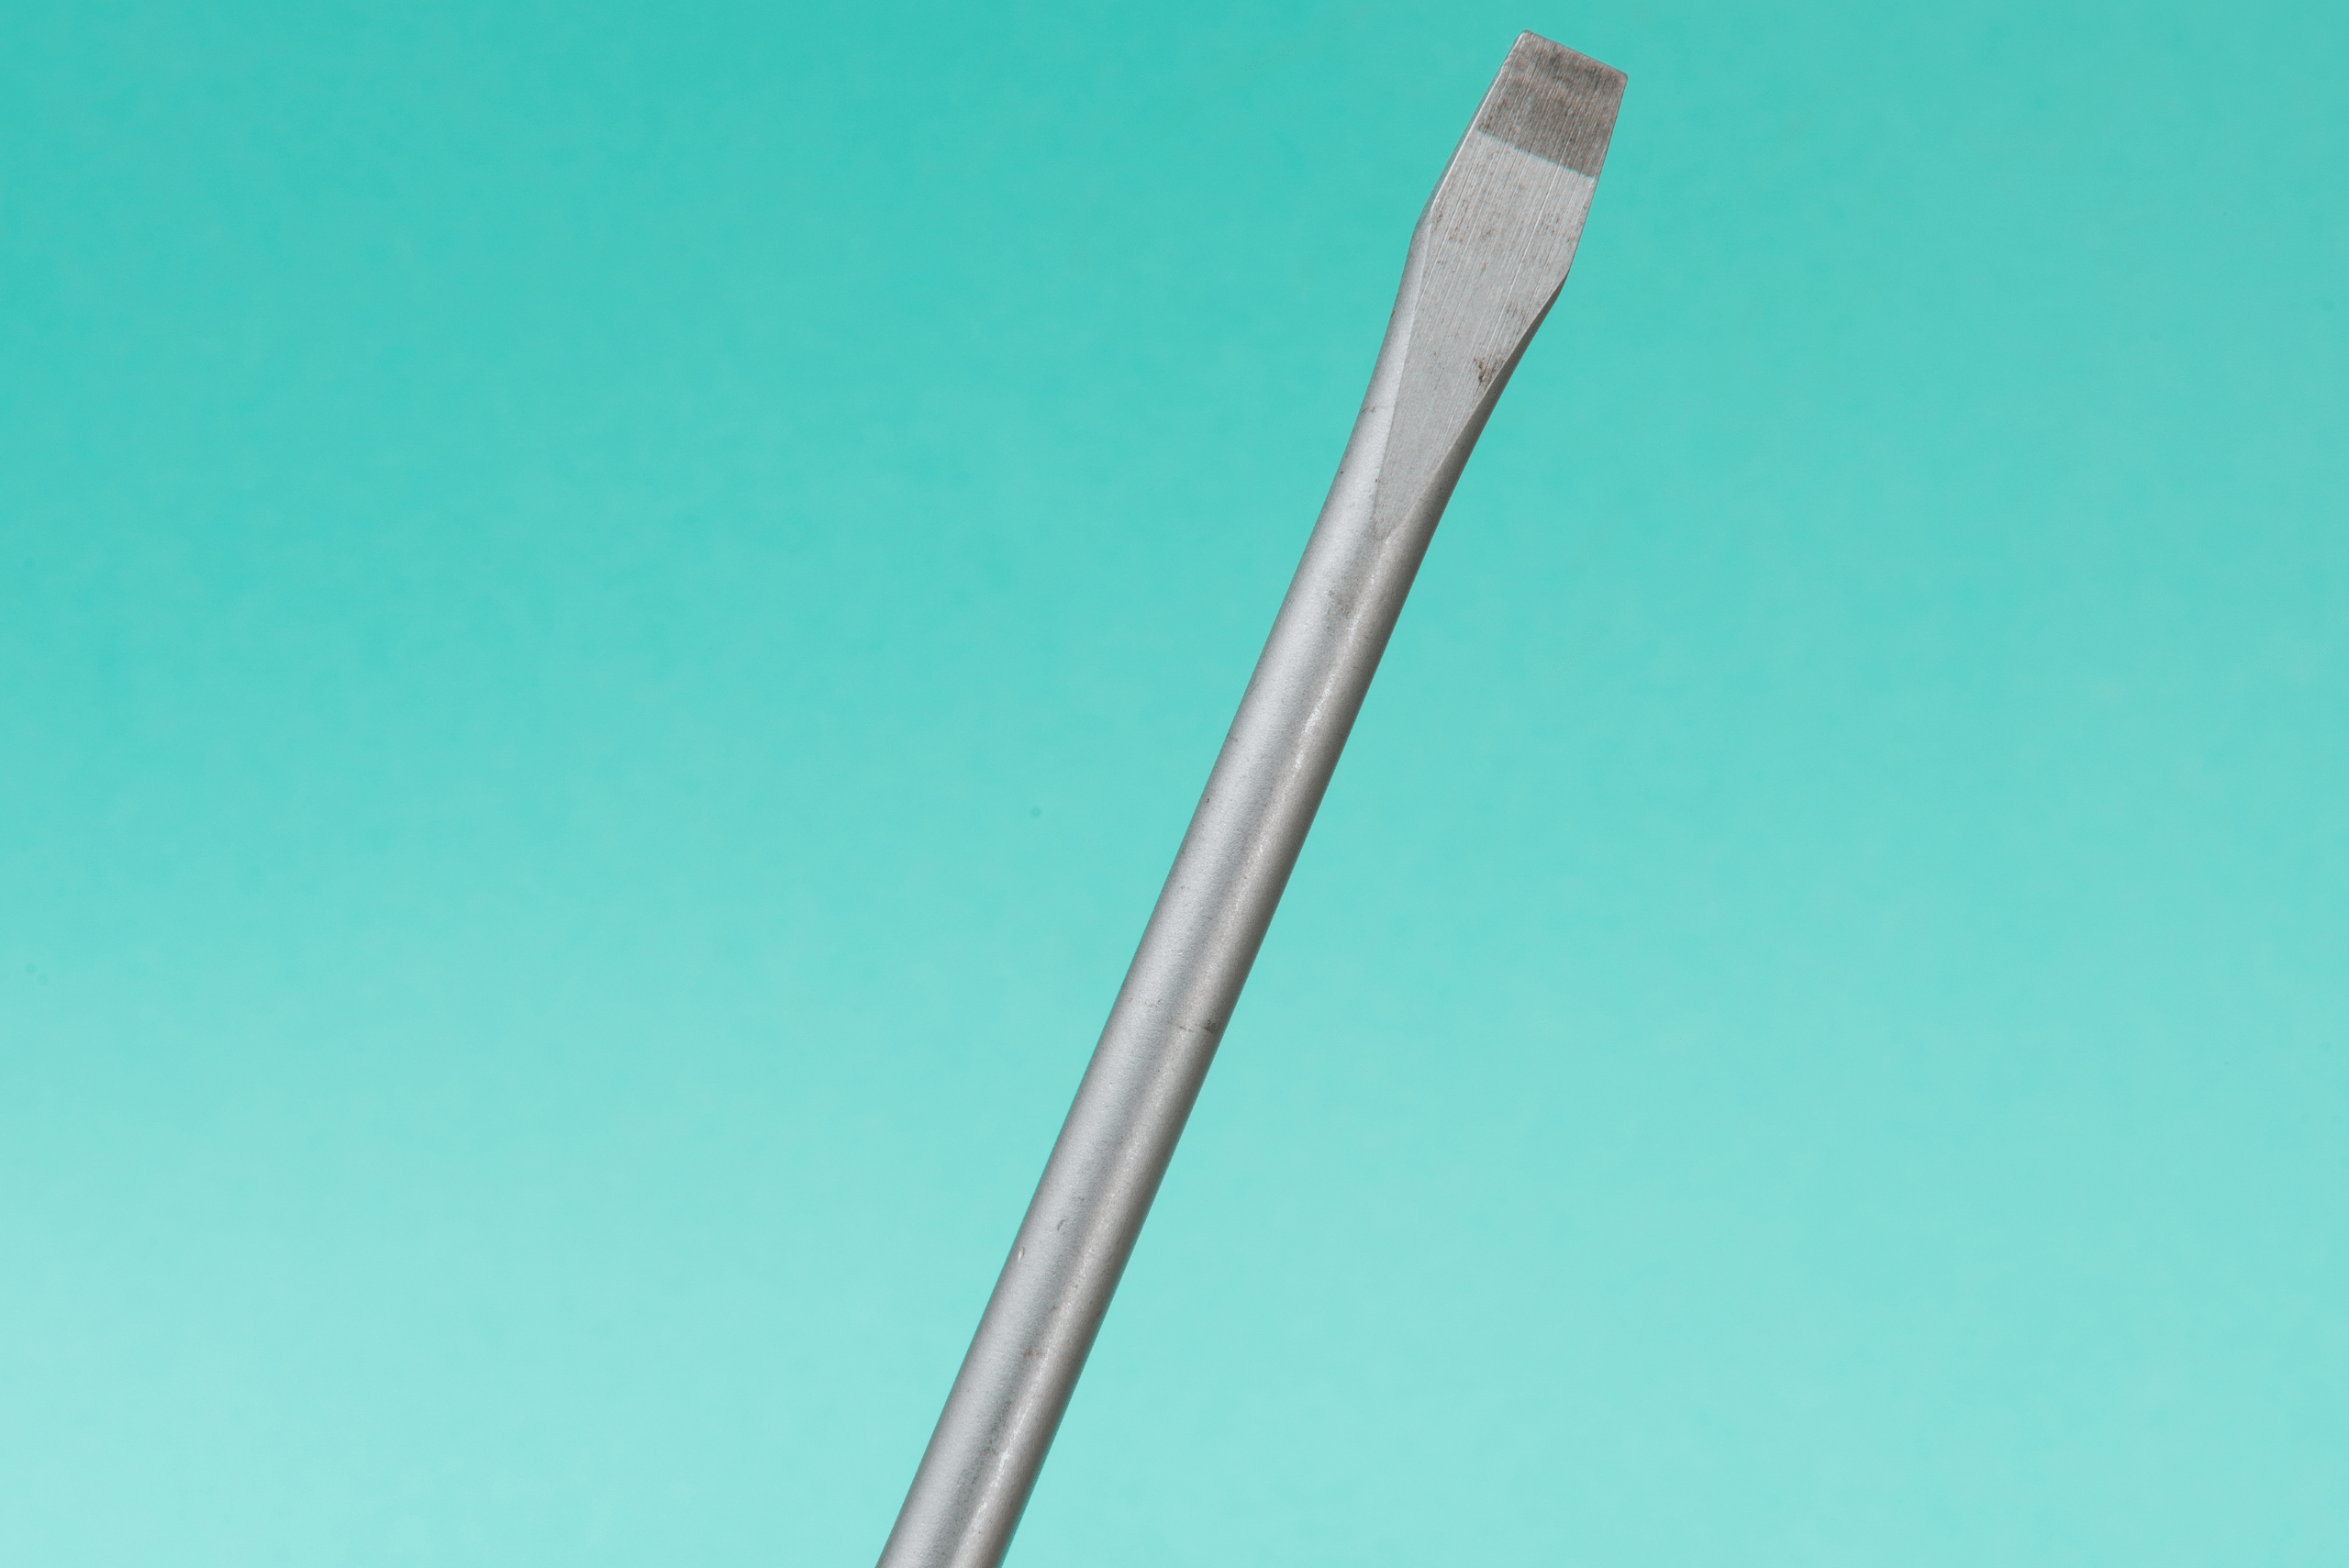 Closeup of the tip of a flathead screwdriver.